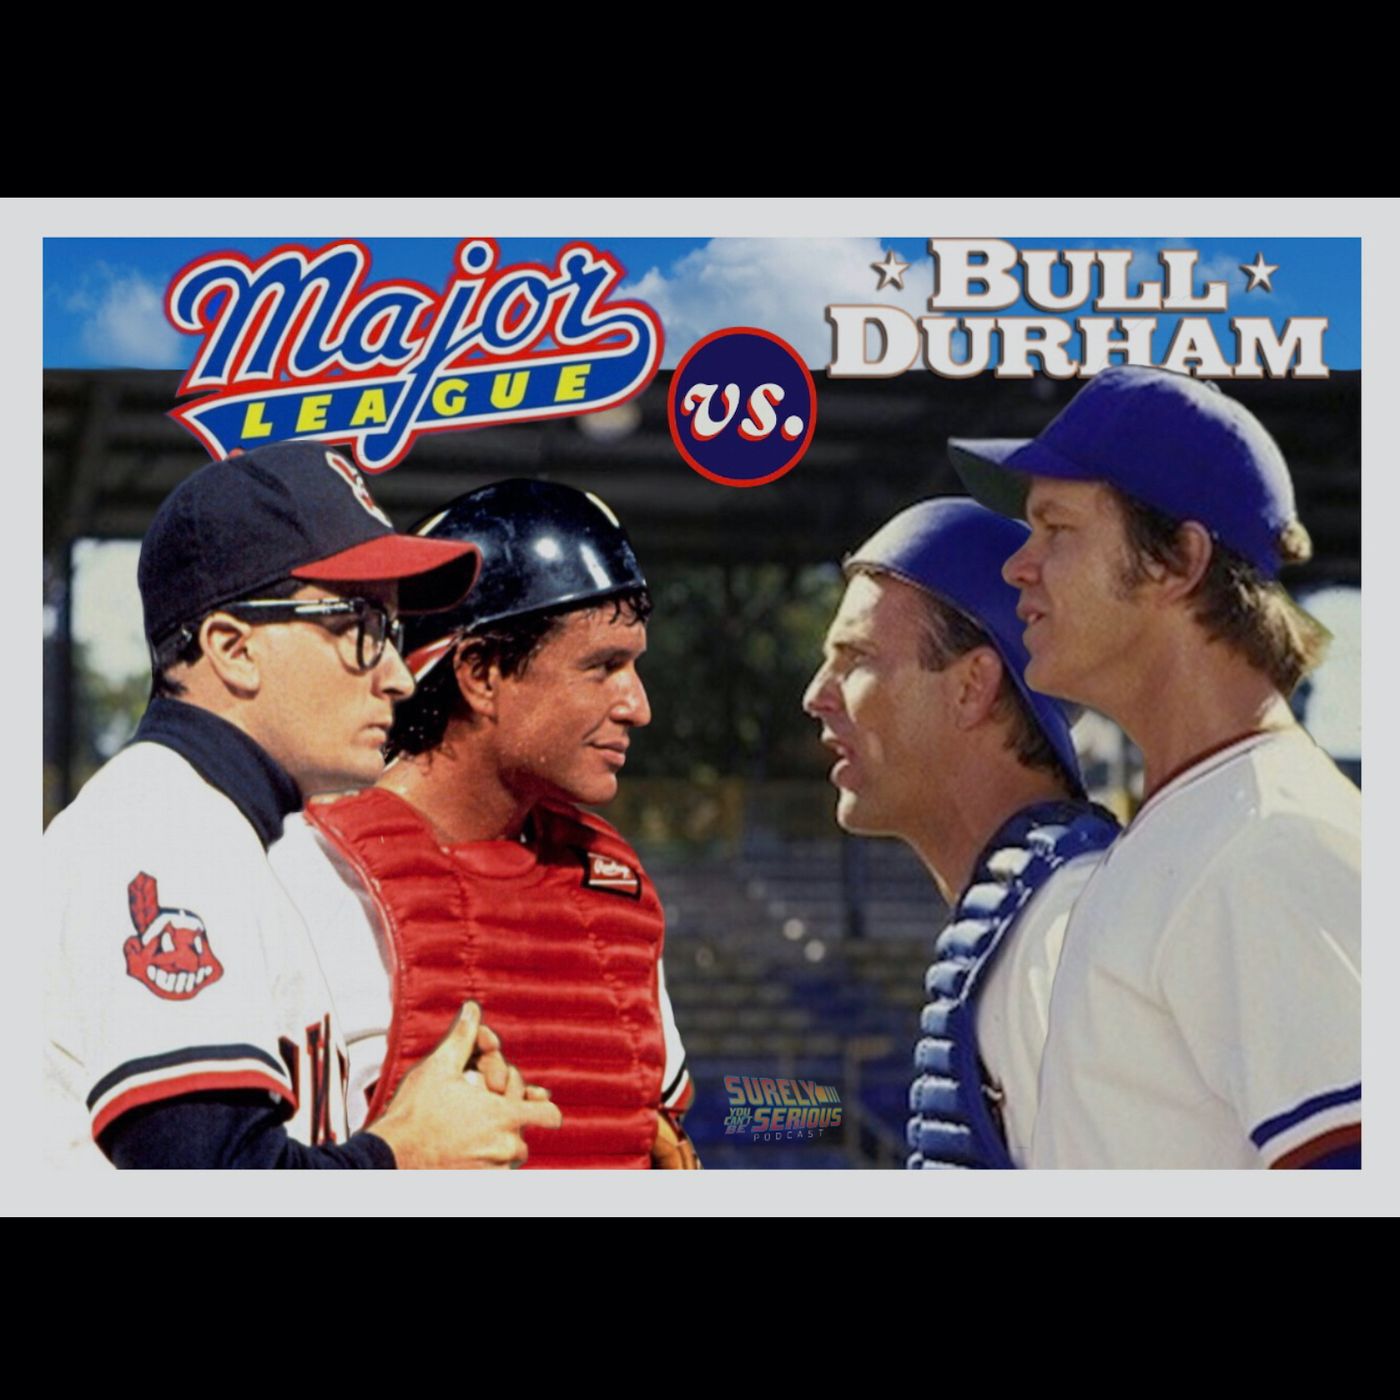 Bull Durham (1988) -or- Major League (1989) Image